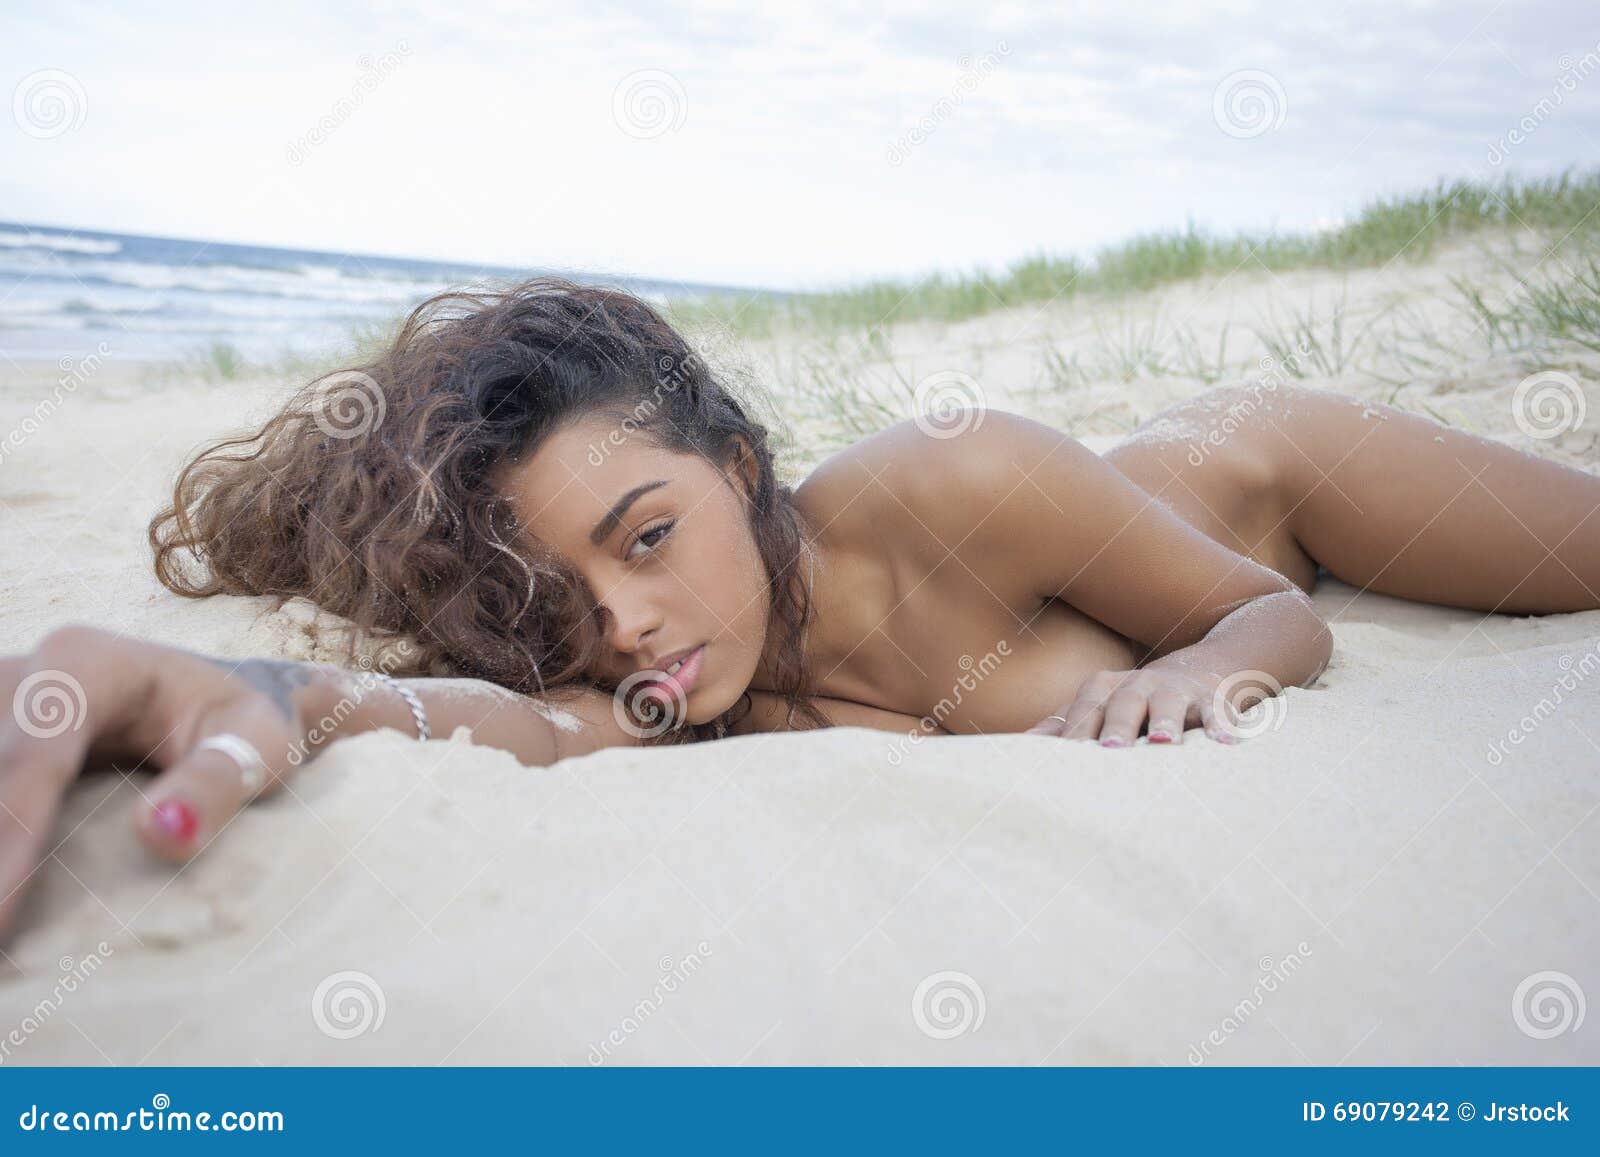 audur palsdottir share bare women on beach photos